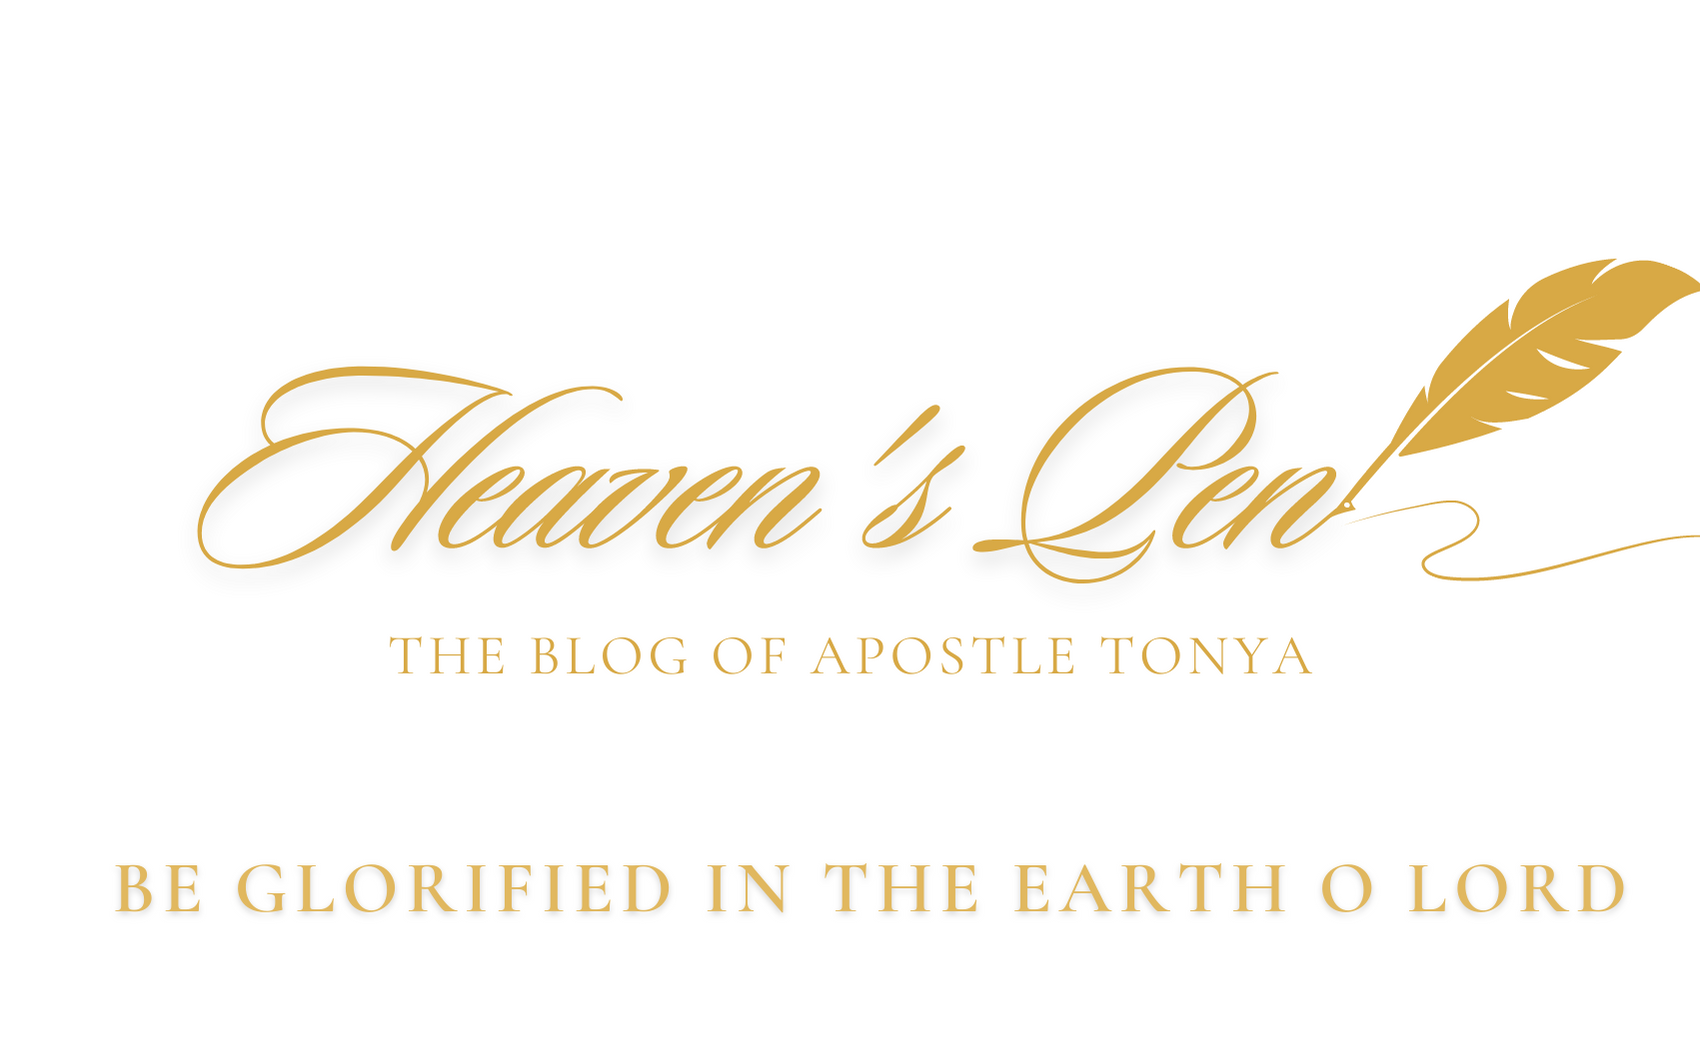 The Blog of Apostle Tonya